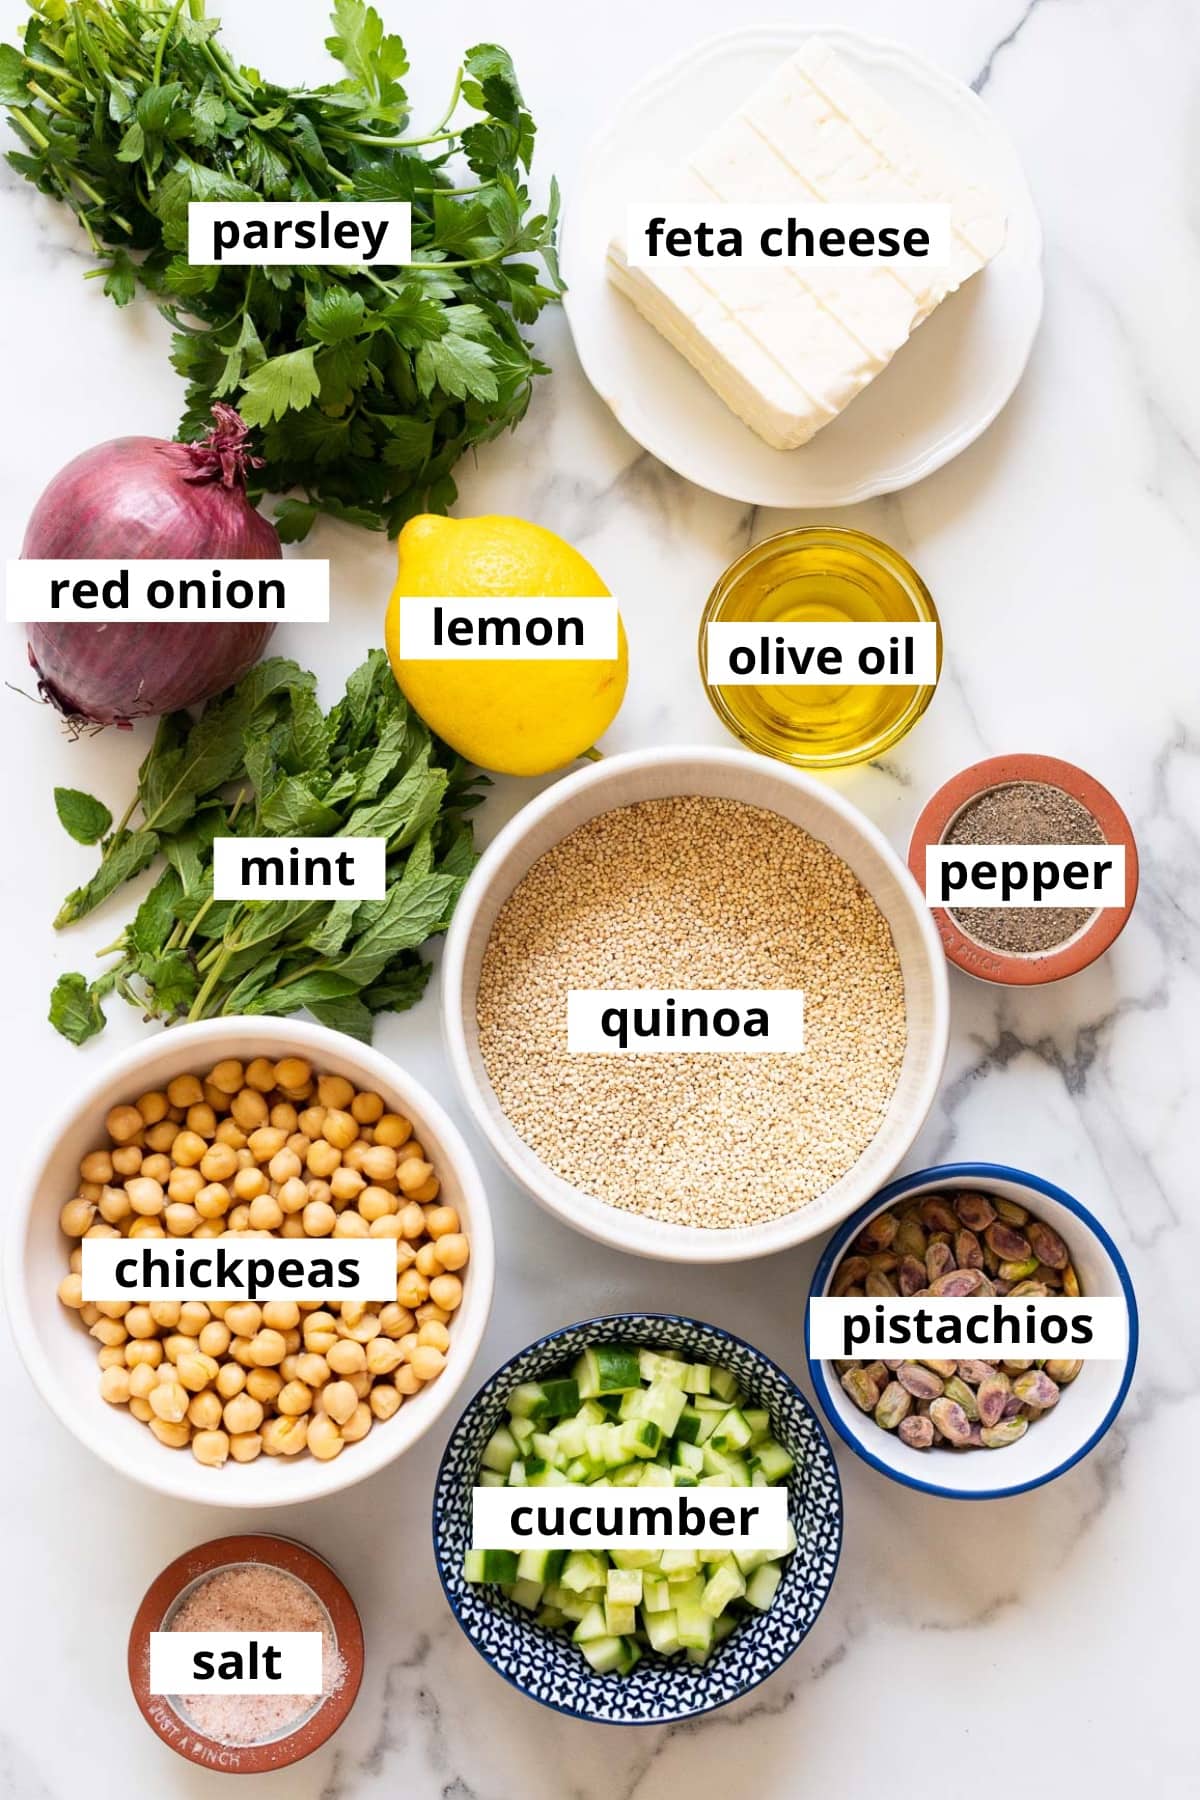 Quinoa, chickpeas, feta cheese, parsley, red onion, lemon, olive oil, mint, pepper, pistachios, cucumber, salt.